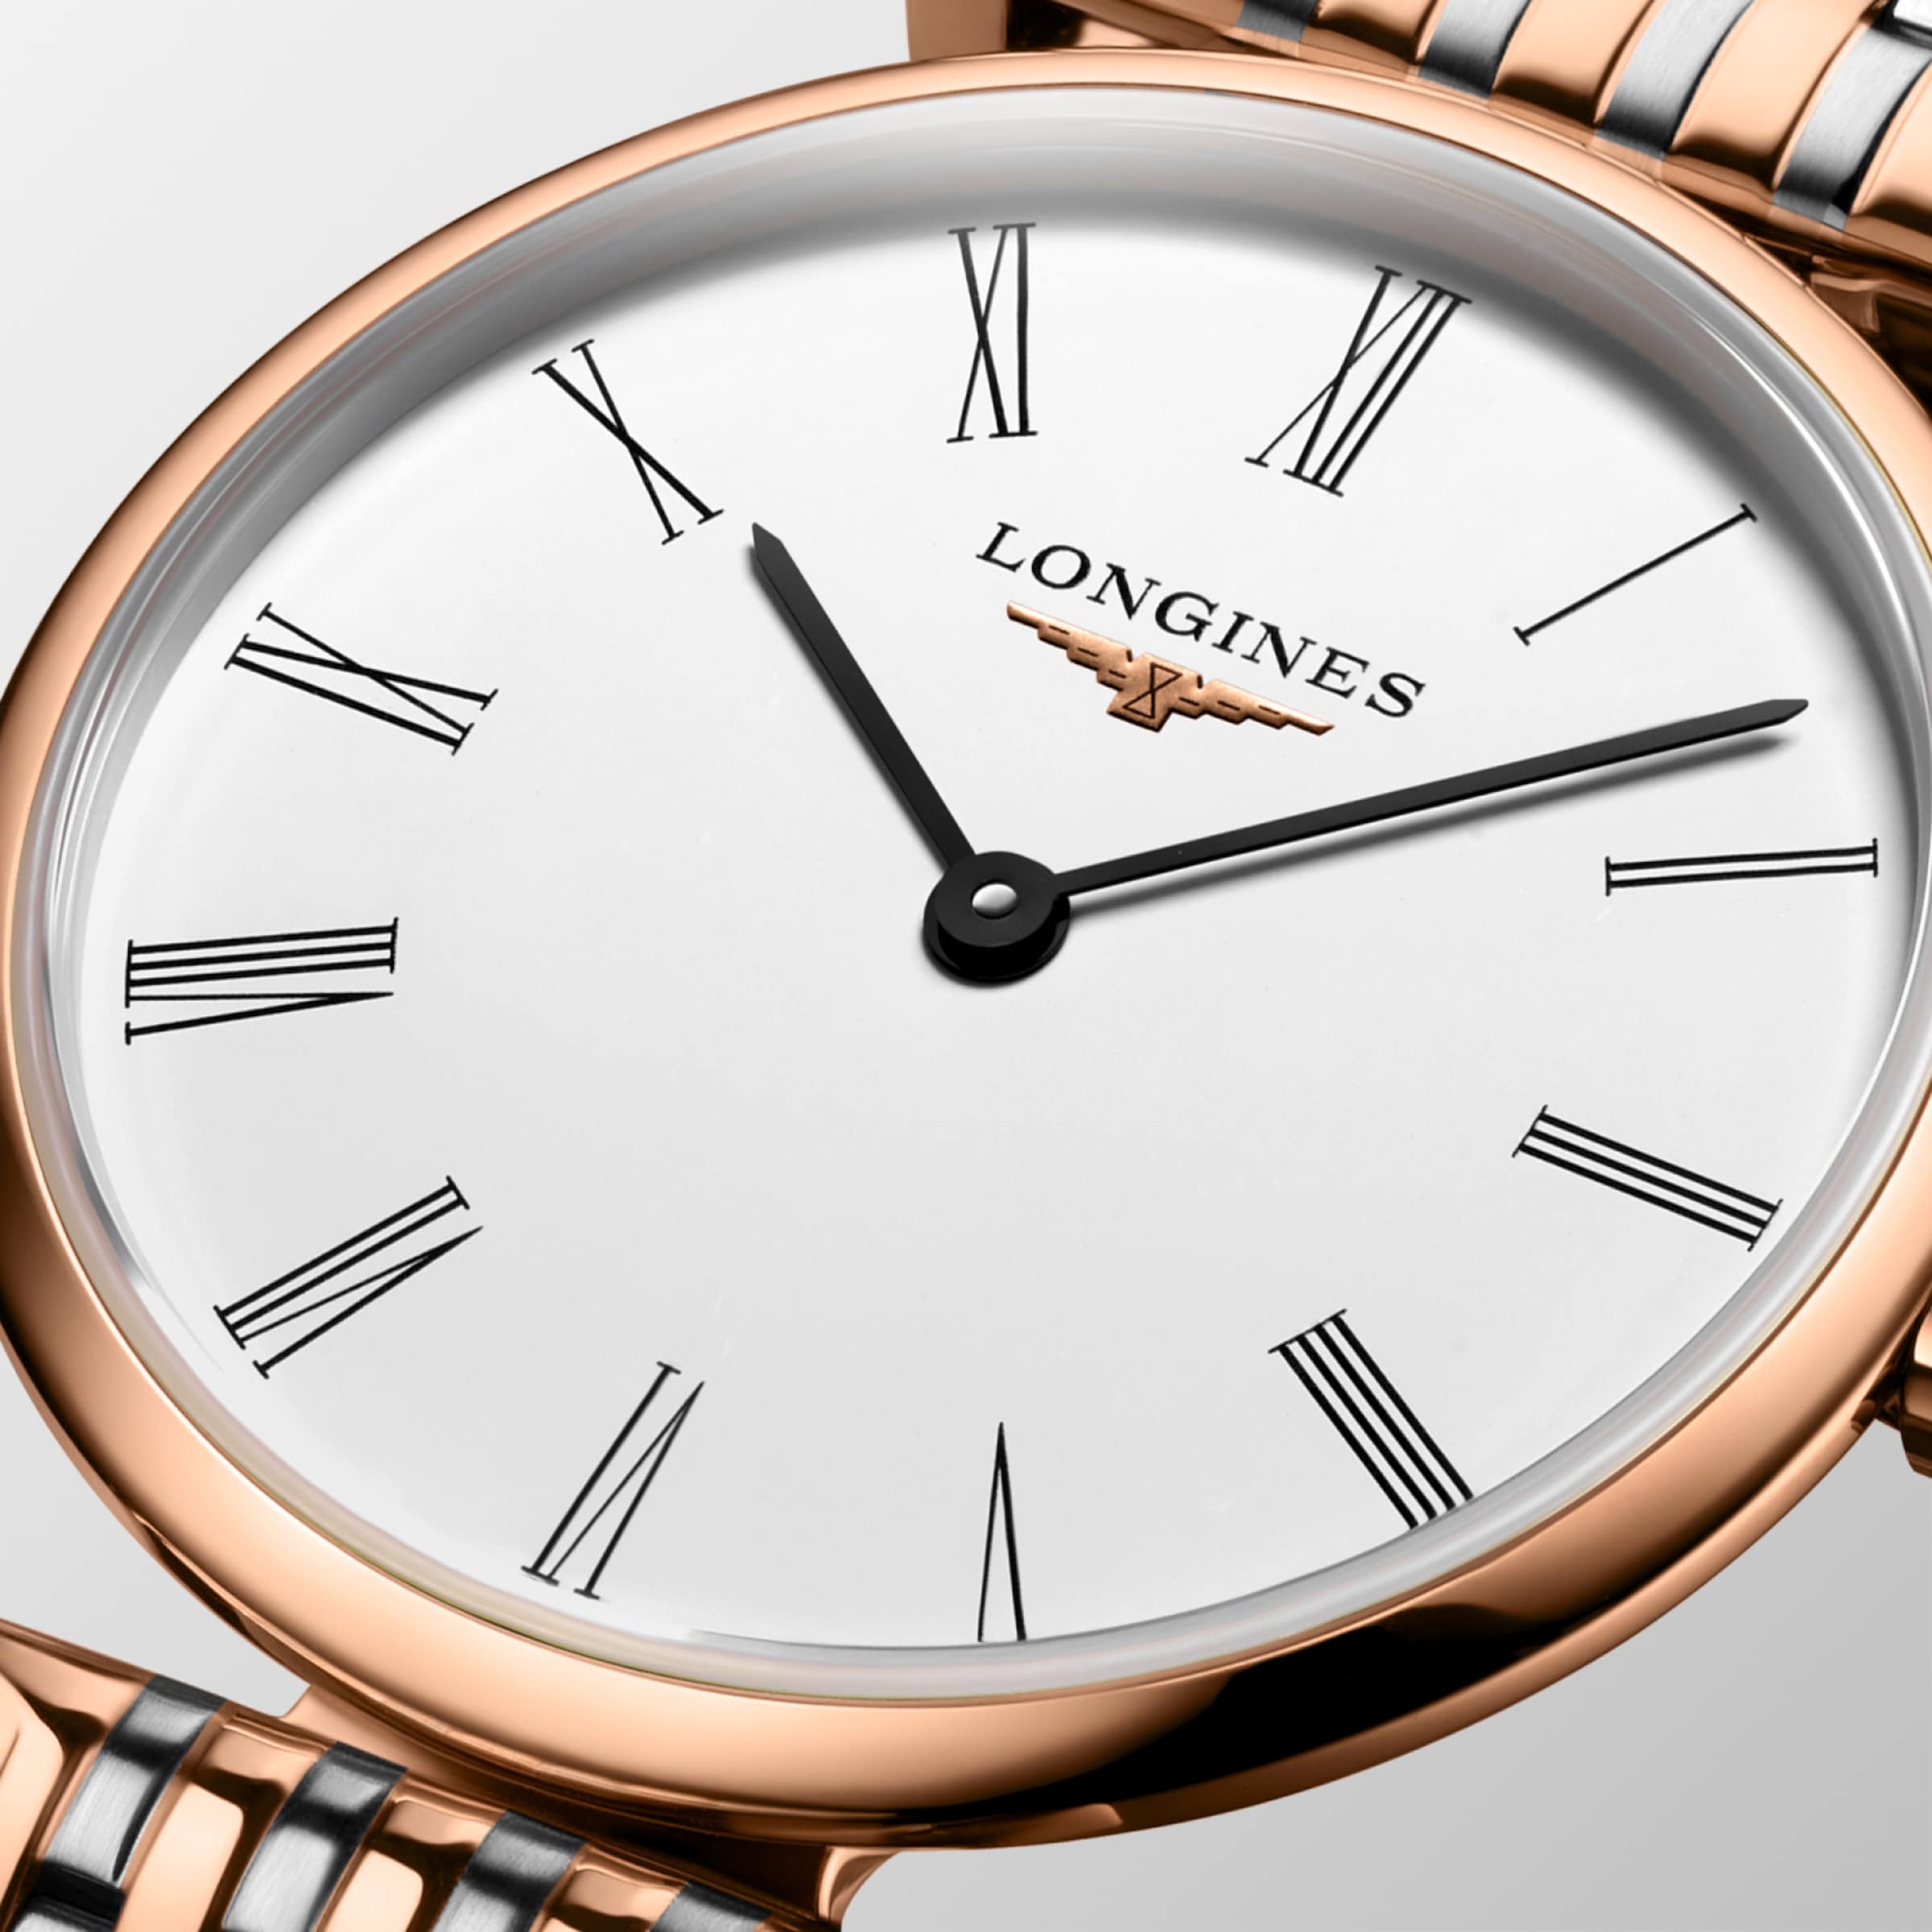 Longines LA GRANDE CLASSIQUE DE LONGINES Quartz Red PVD coating Watch - L4.209.1.91.7